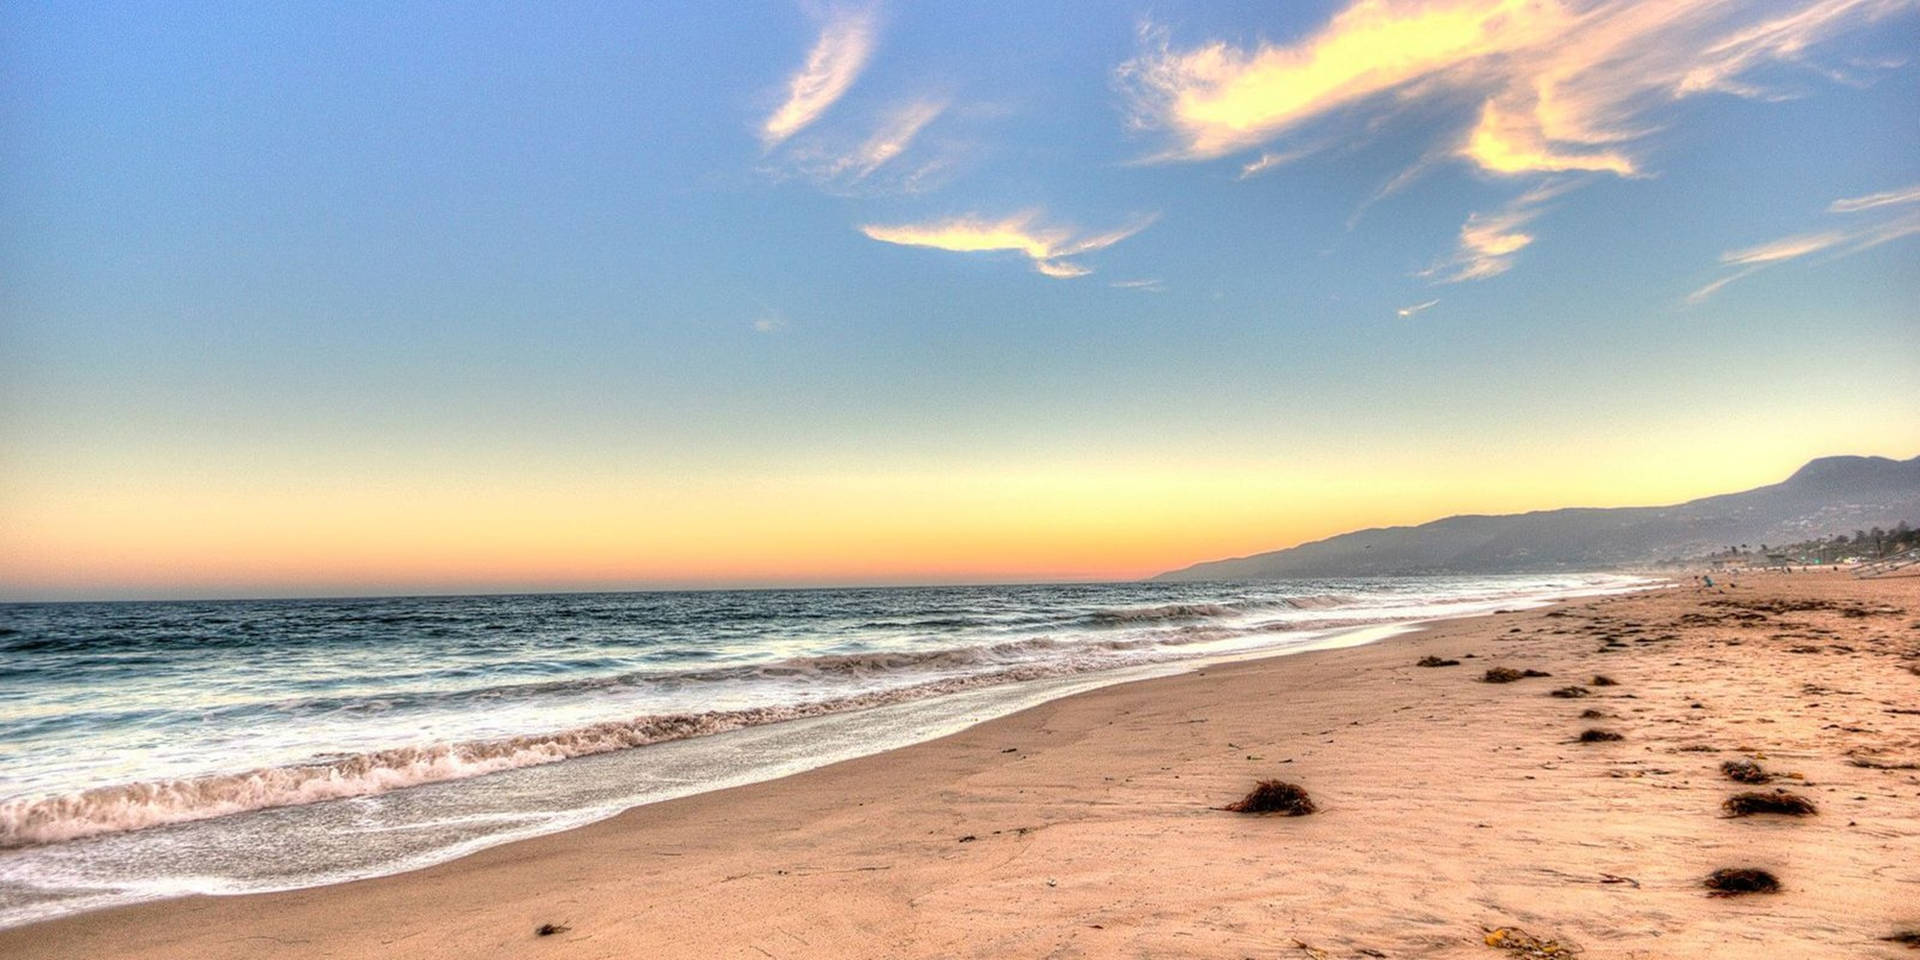 “The Evening Sunsets of Malibu, California” Wallpaper